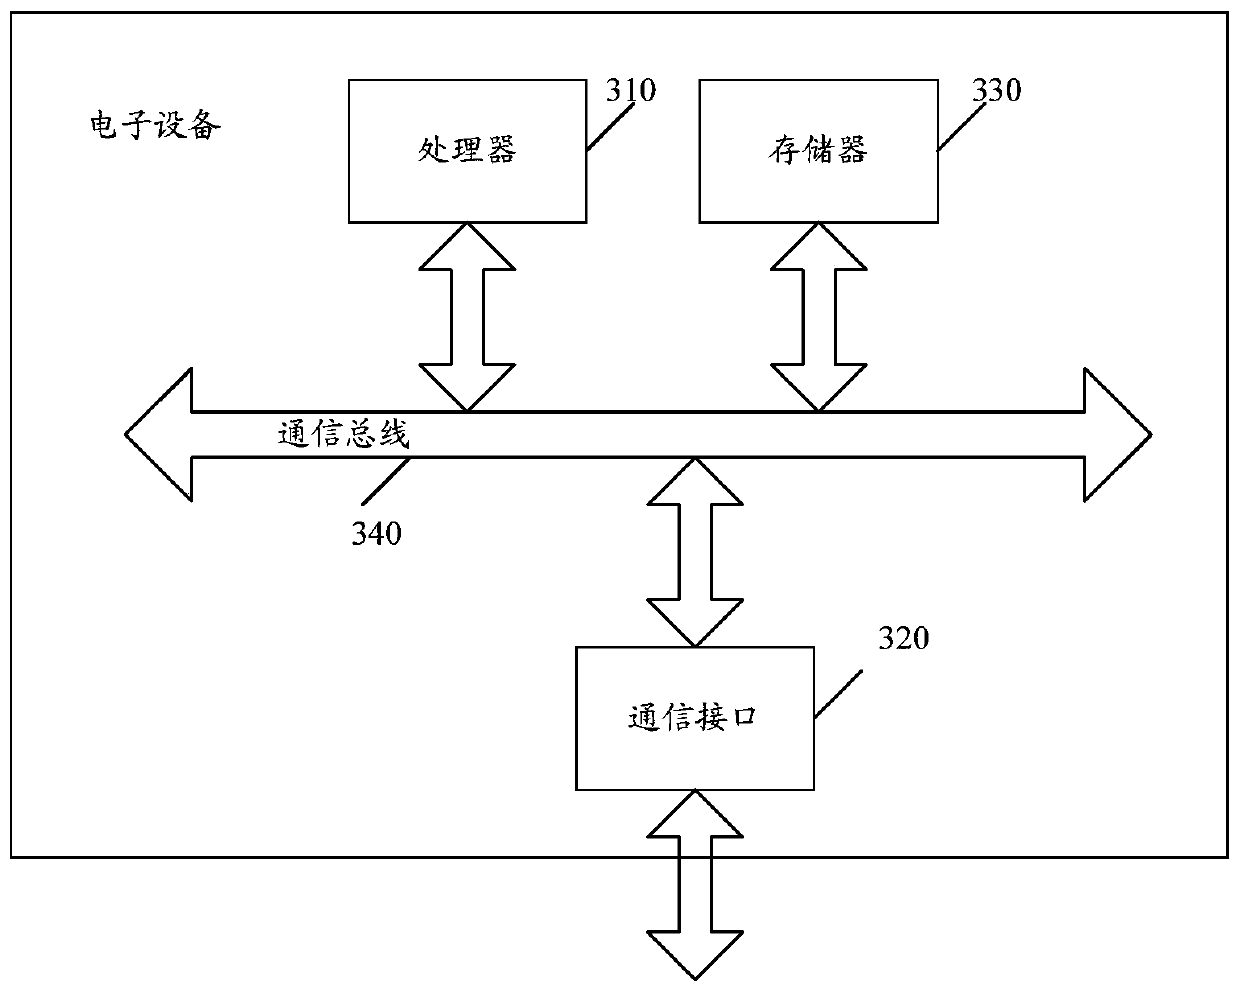 Printed circuit board homogenization determination method and device